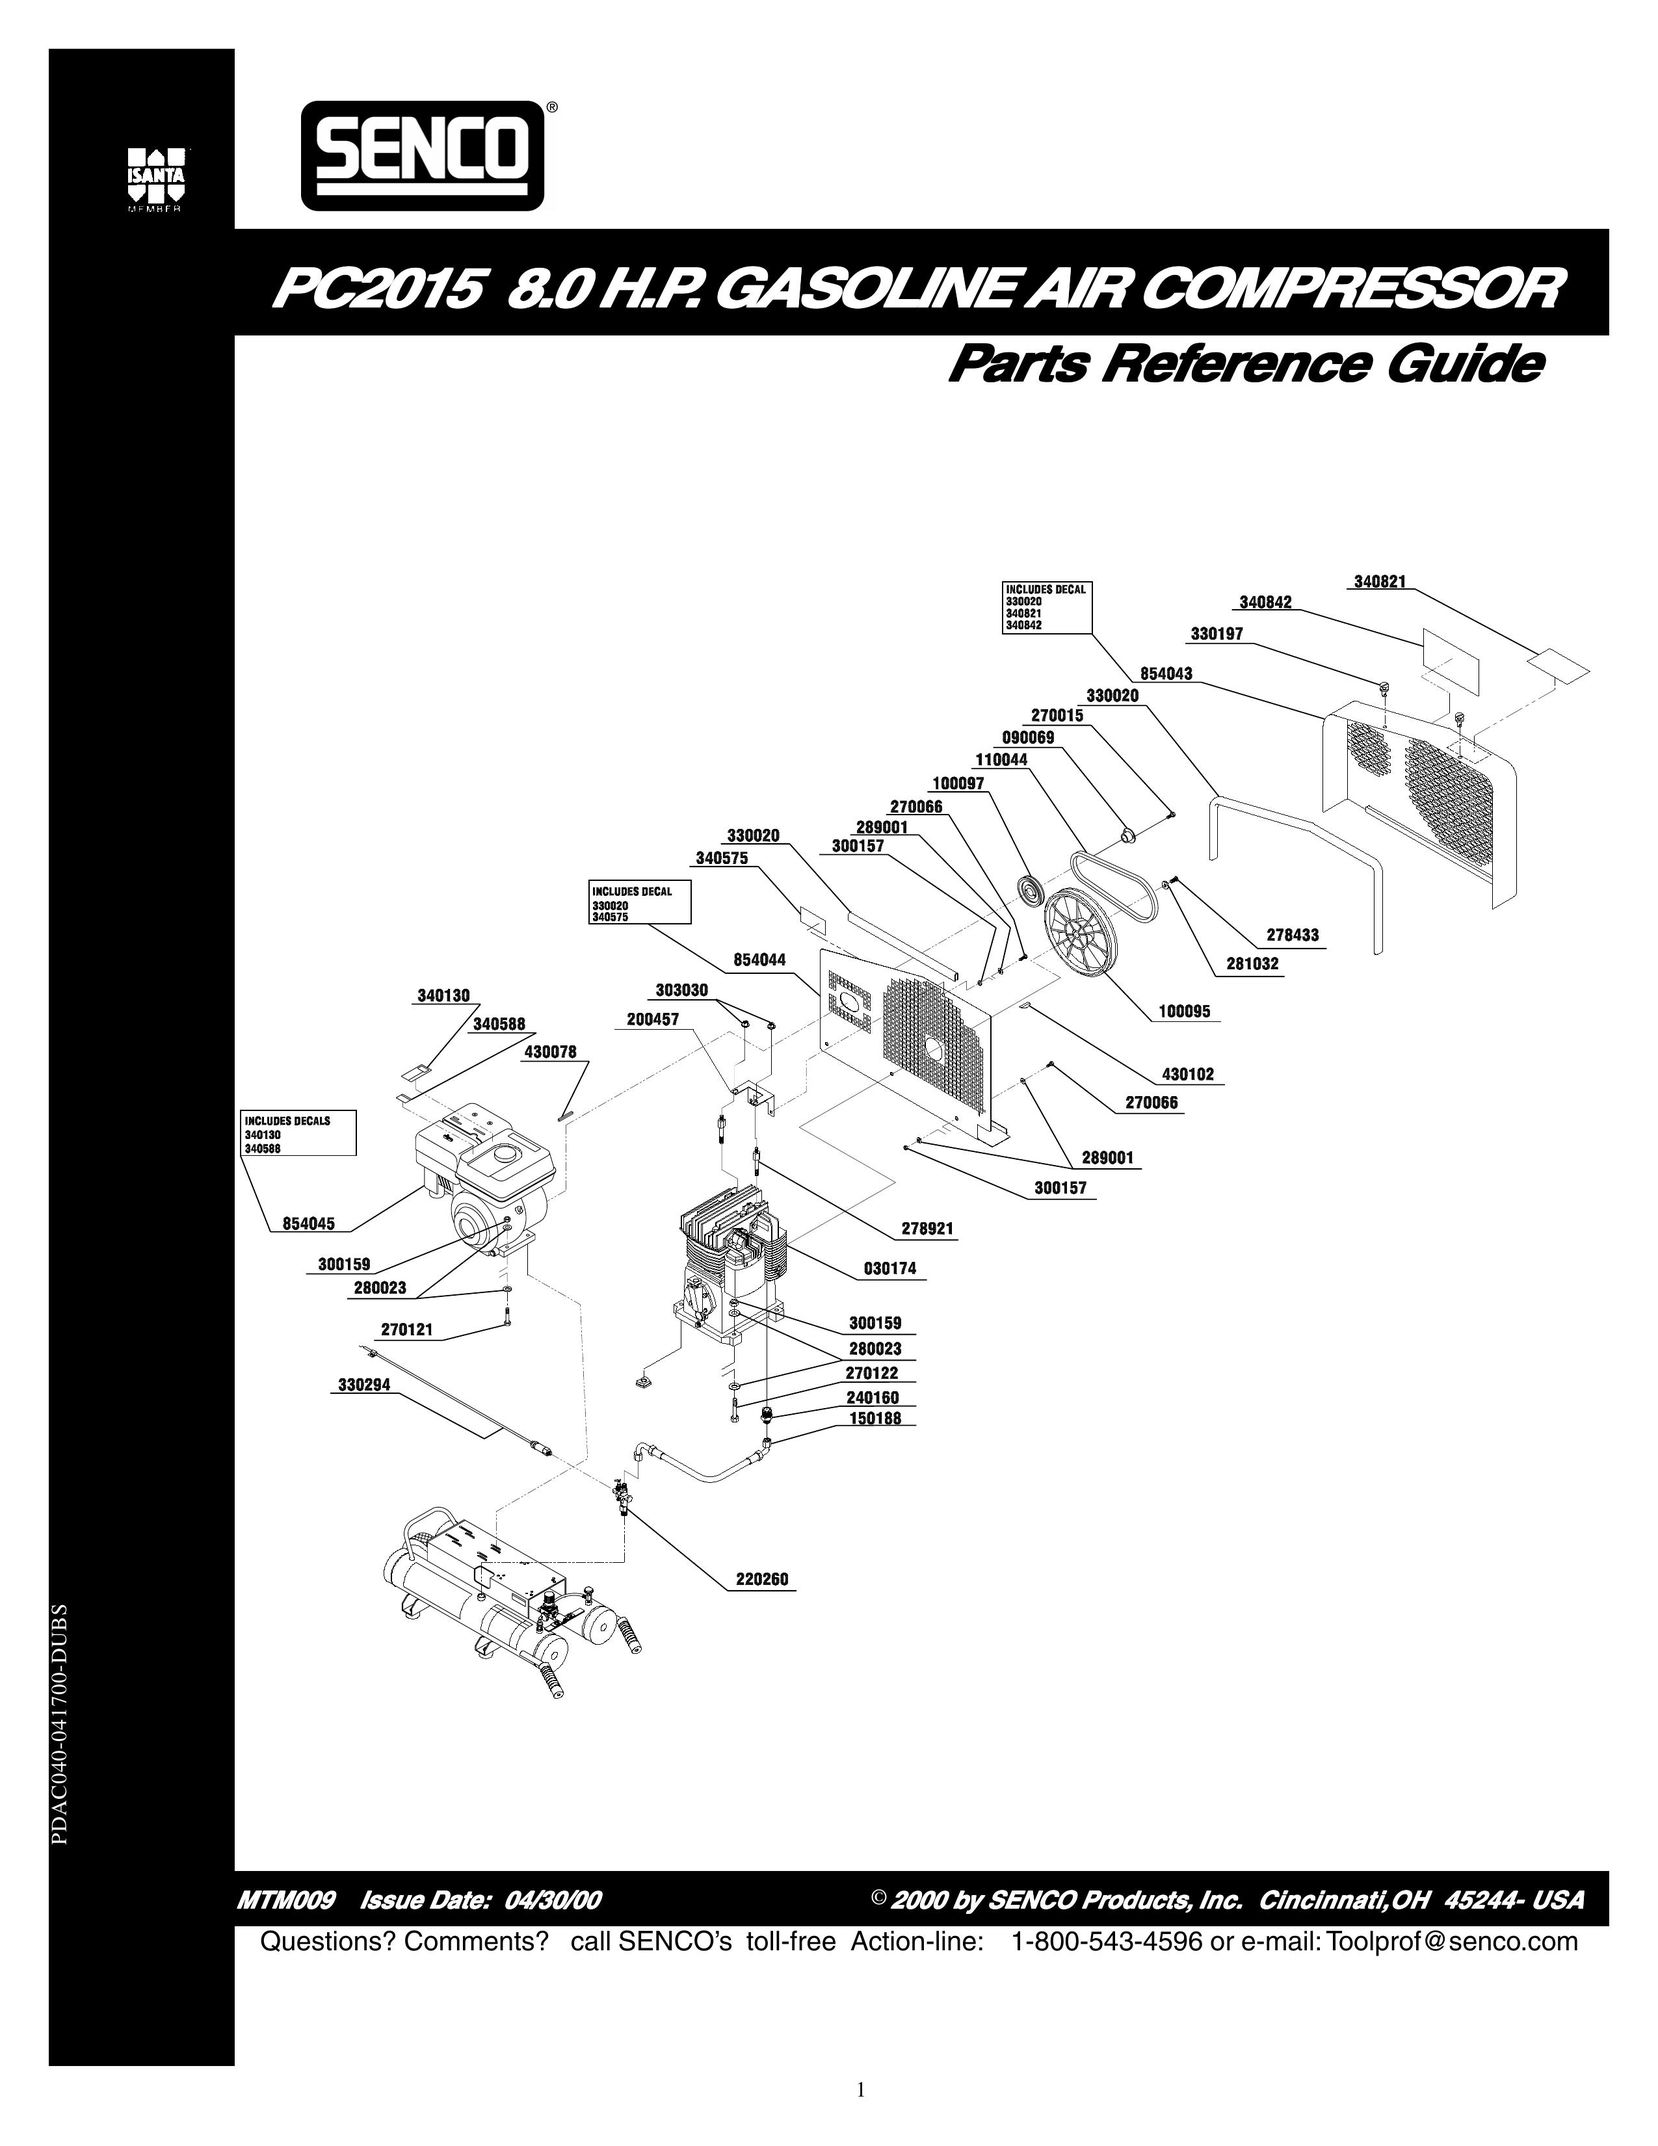 Senco PC2015 8.0 Air Compressor User Manual